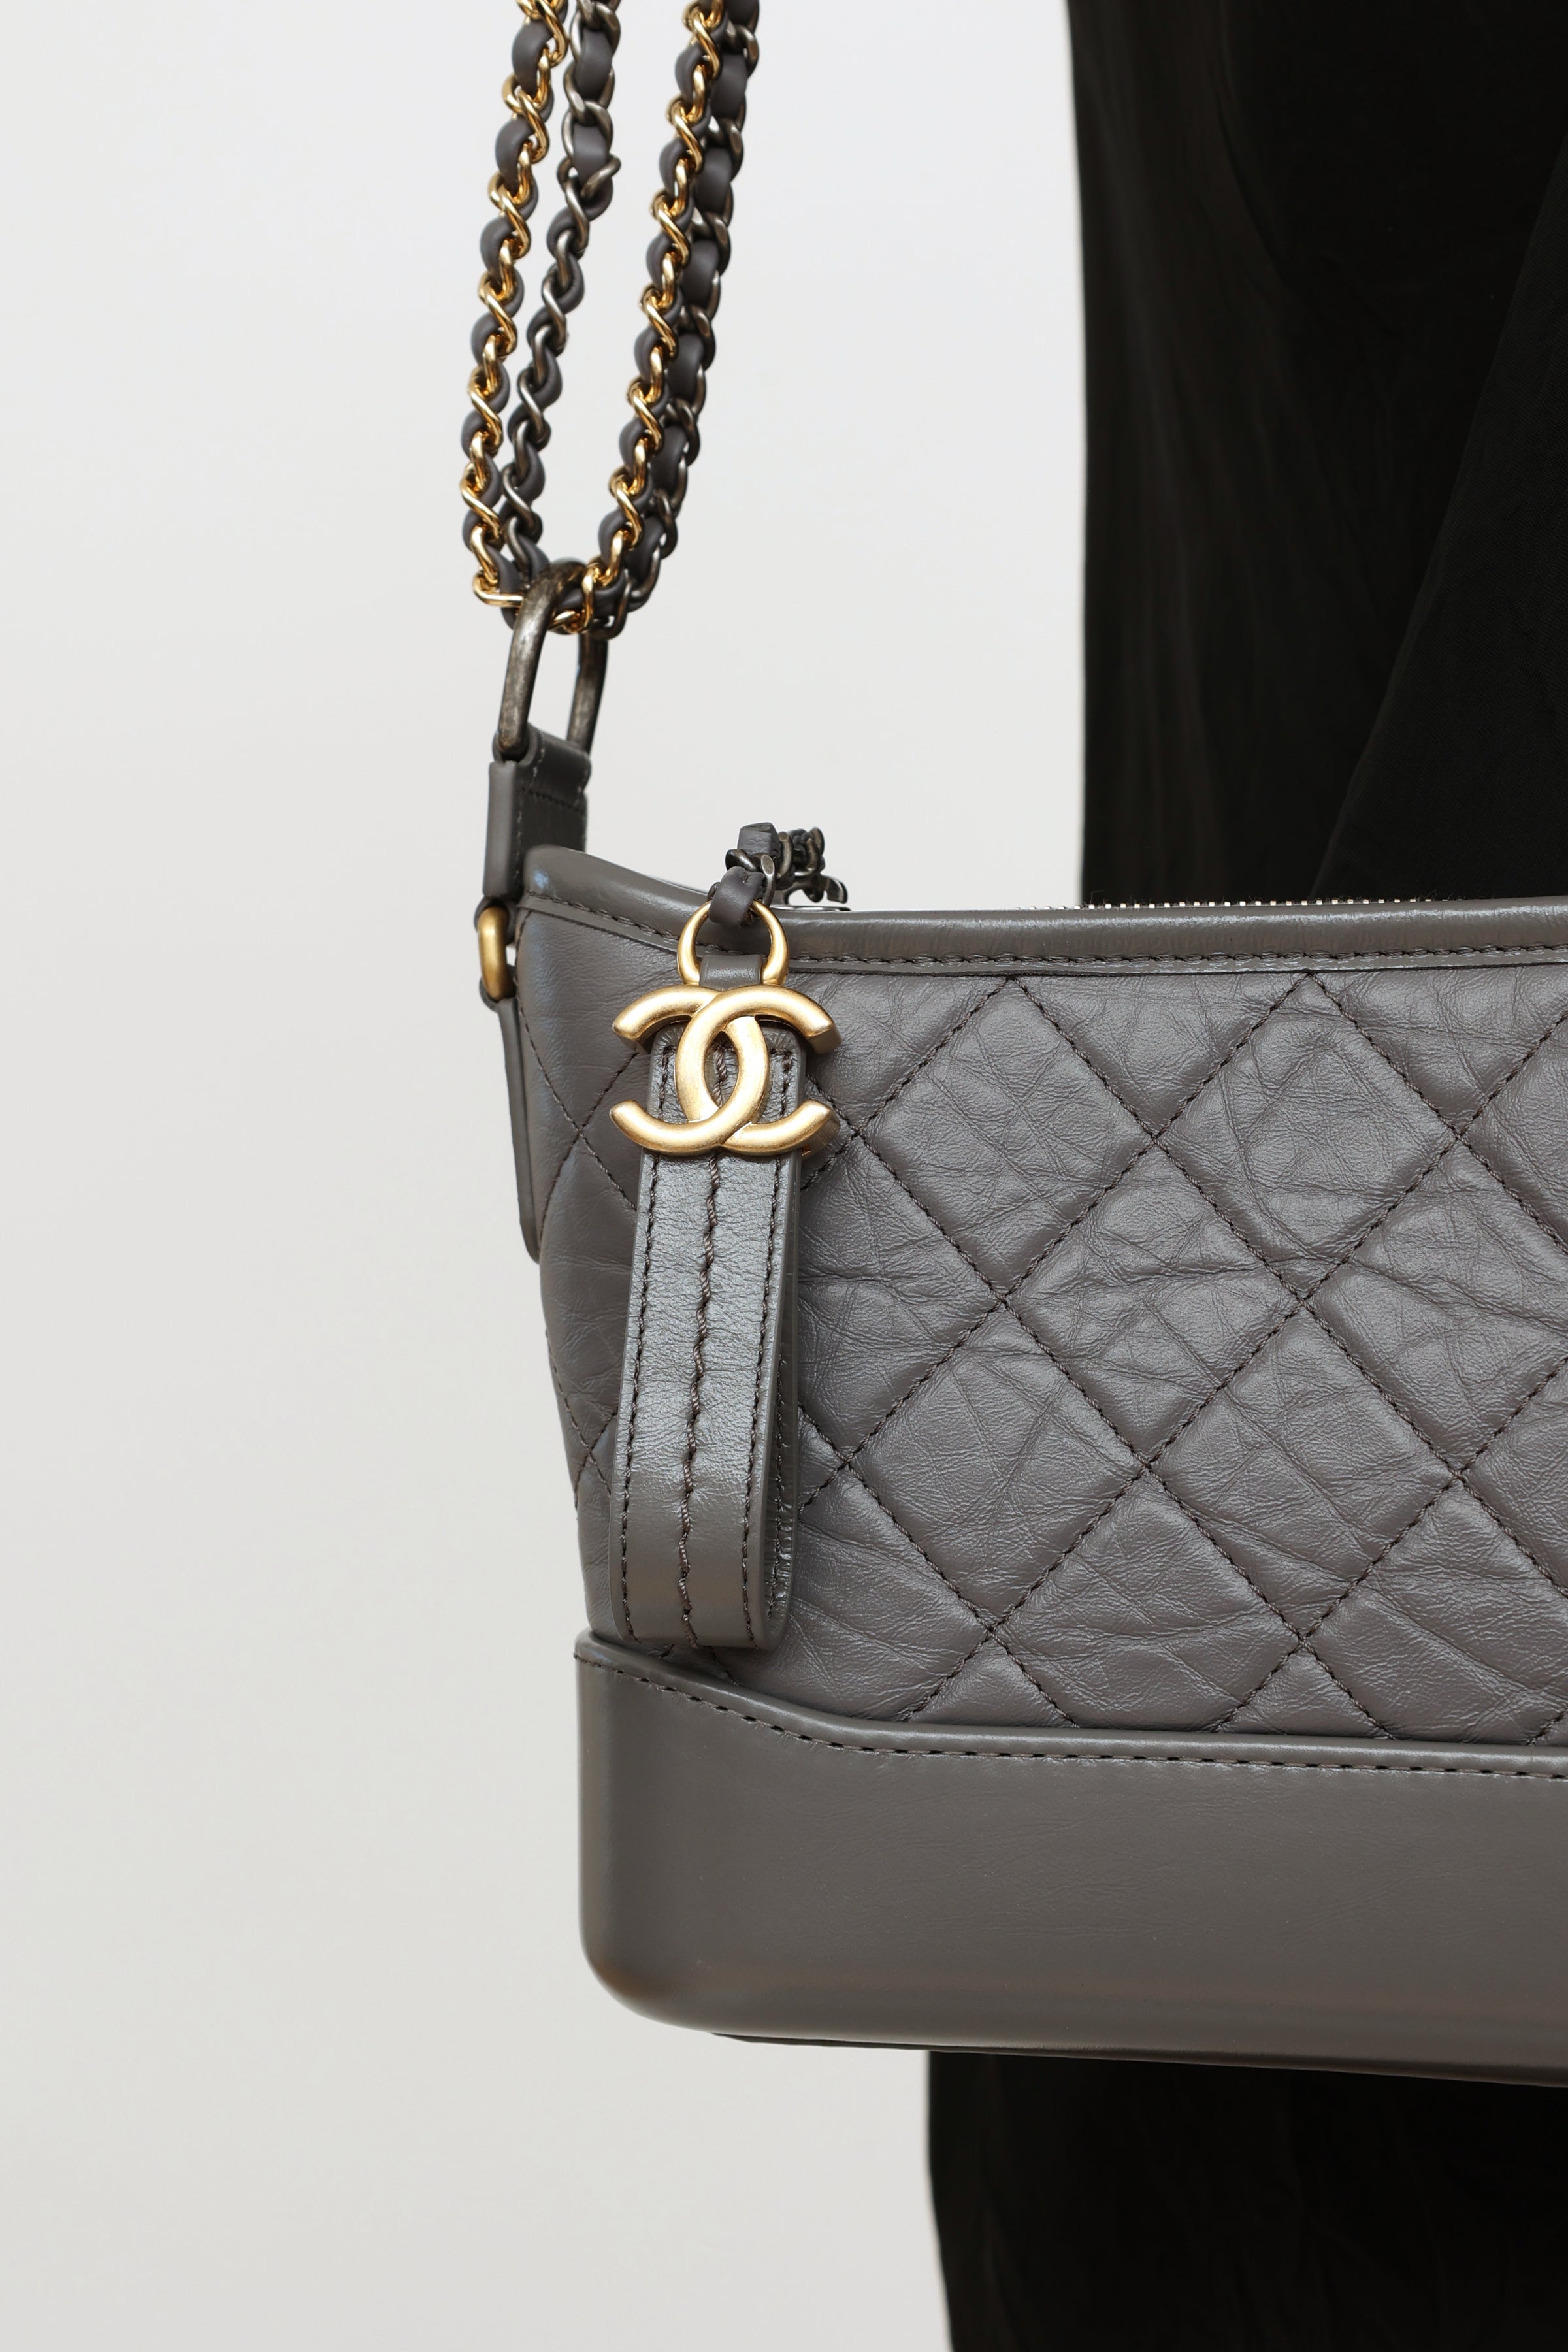 Chanel Gabrielle 28 Tasche bag black HW gold silver Schulterkette leather  leder